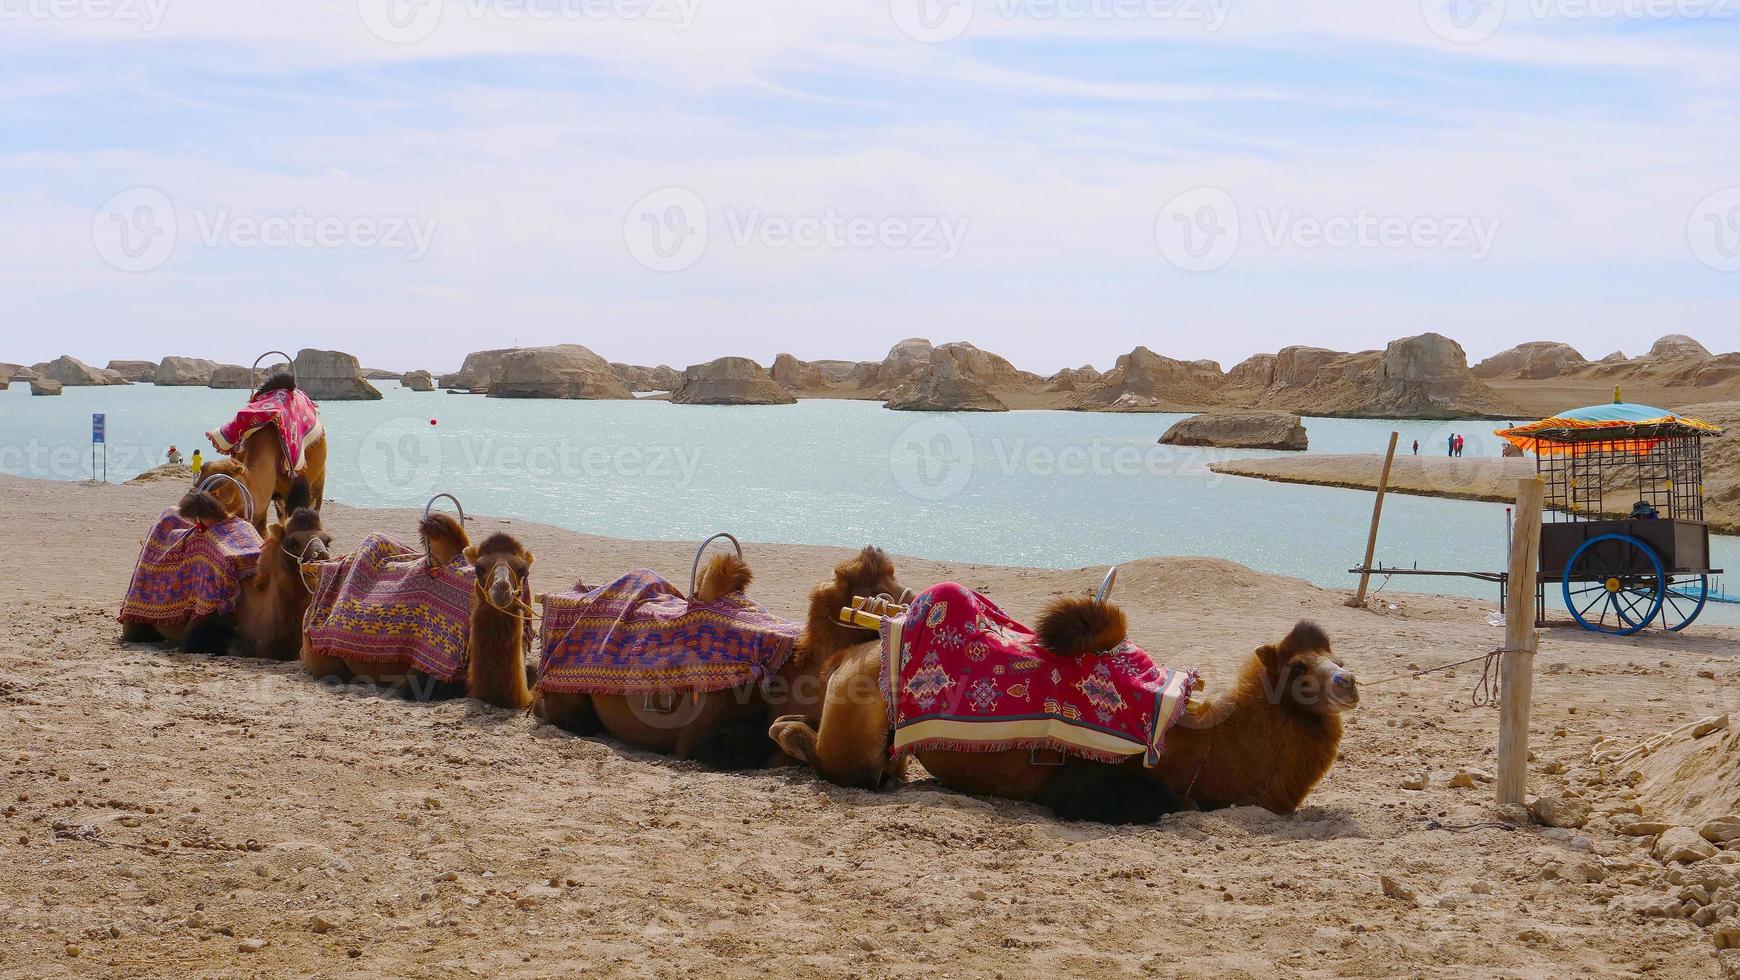 dachaidan wusute water yadan parque geológico y camello qinghai china foto